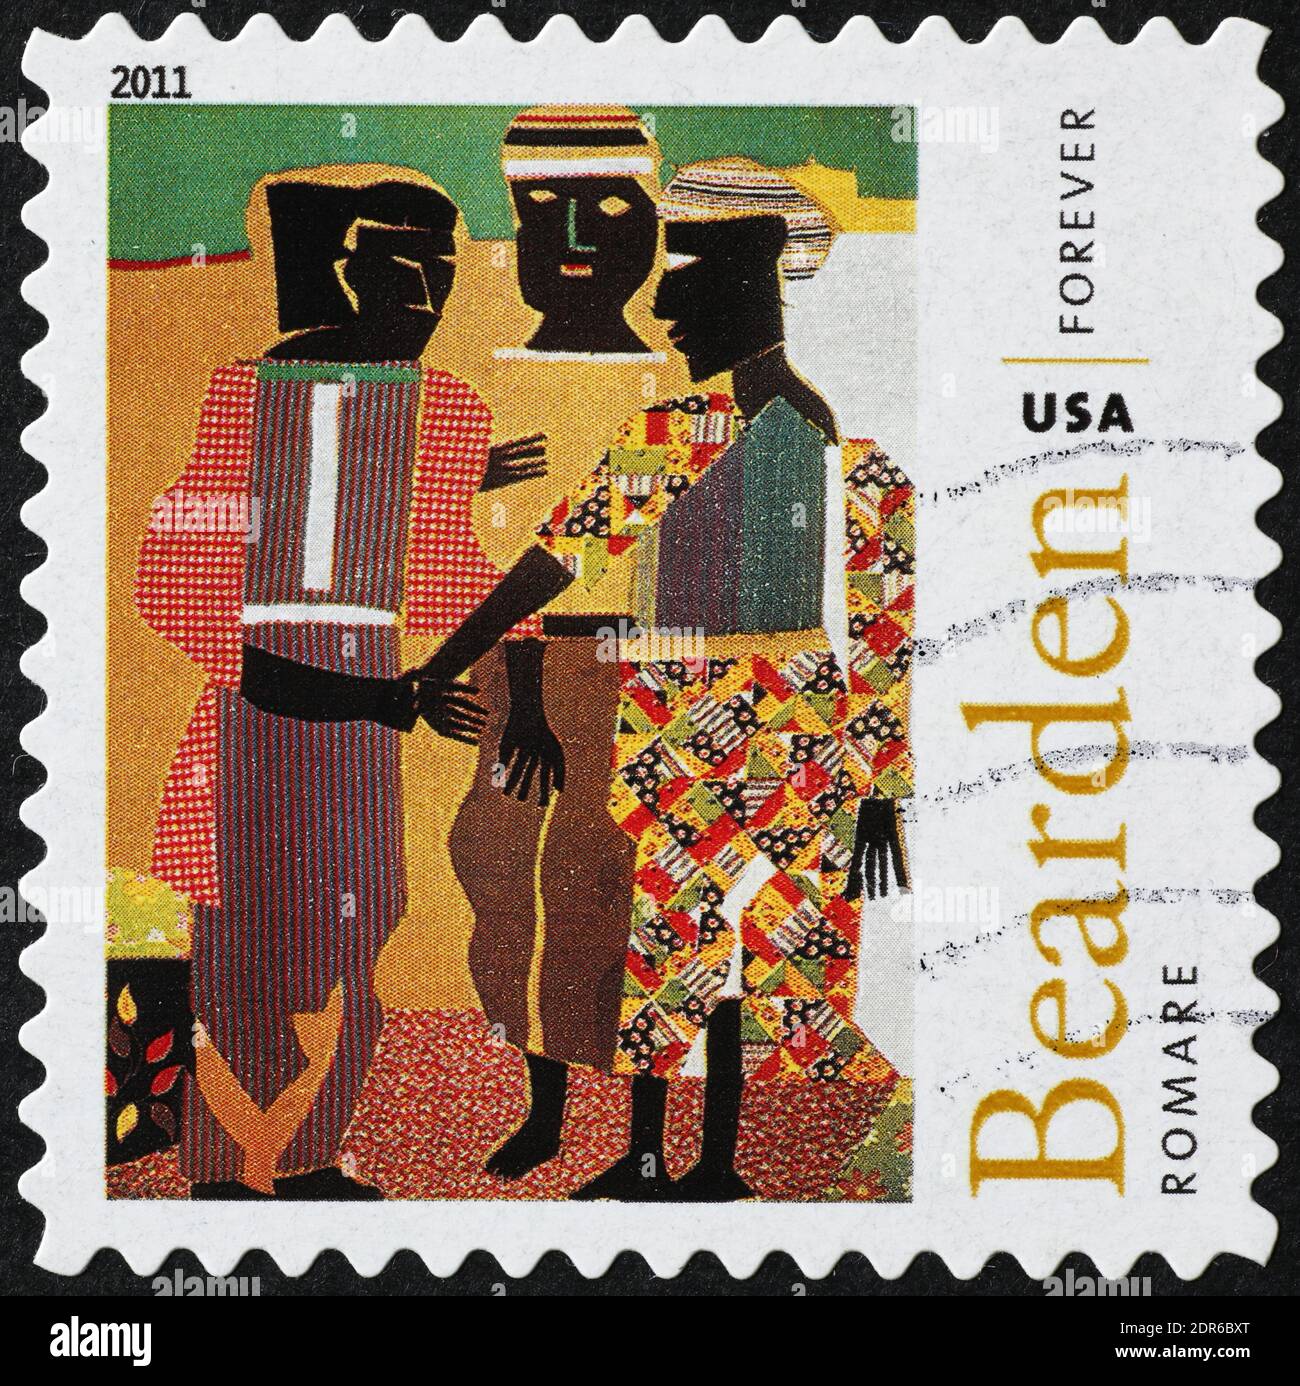 Portrait of three women by Romare Bearden on stamp Stock Photo